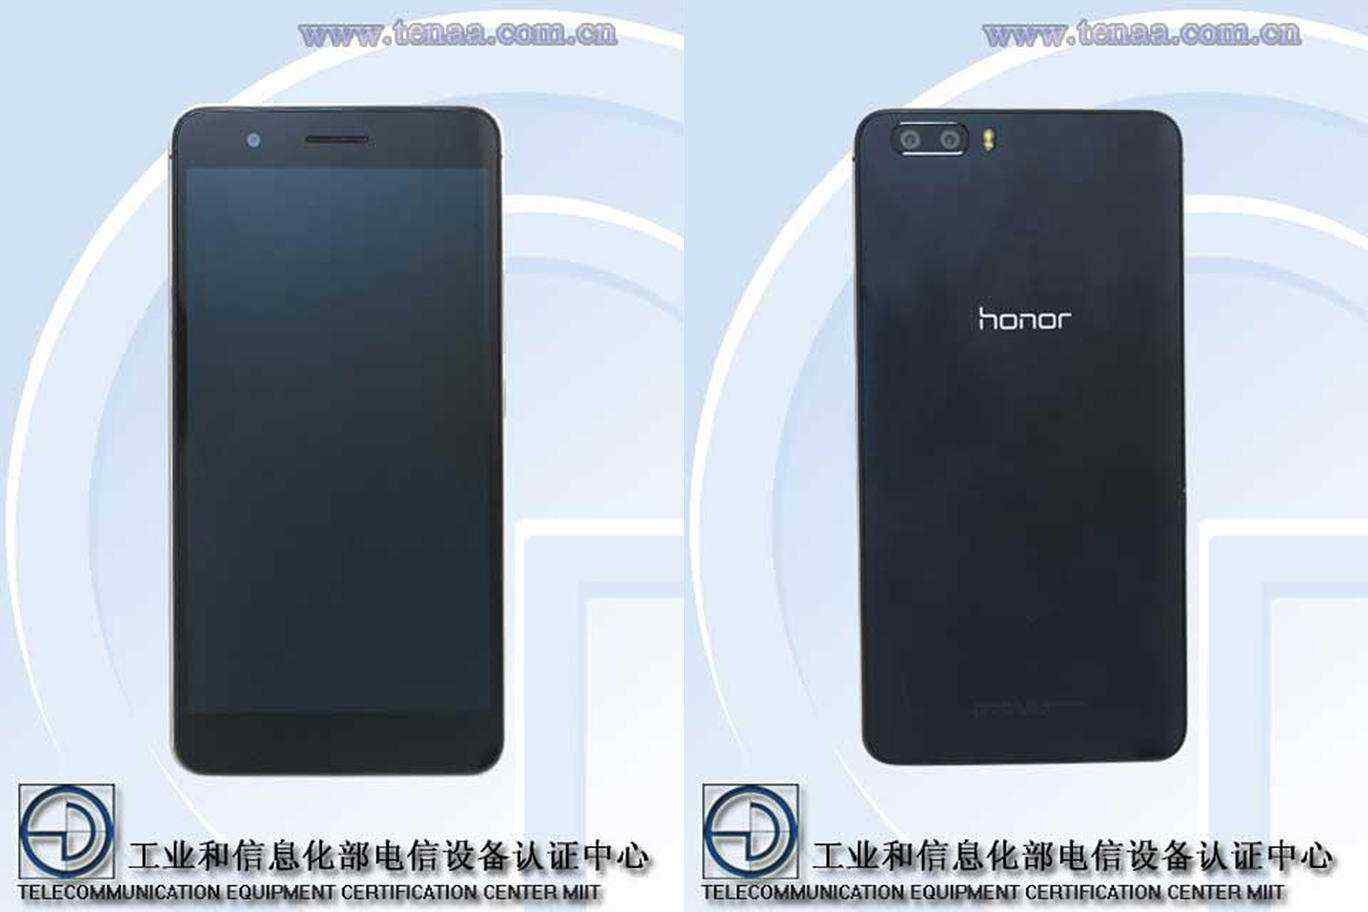 16 декабря Huawei покажет Honor 6 Plus с тремя камерами